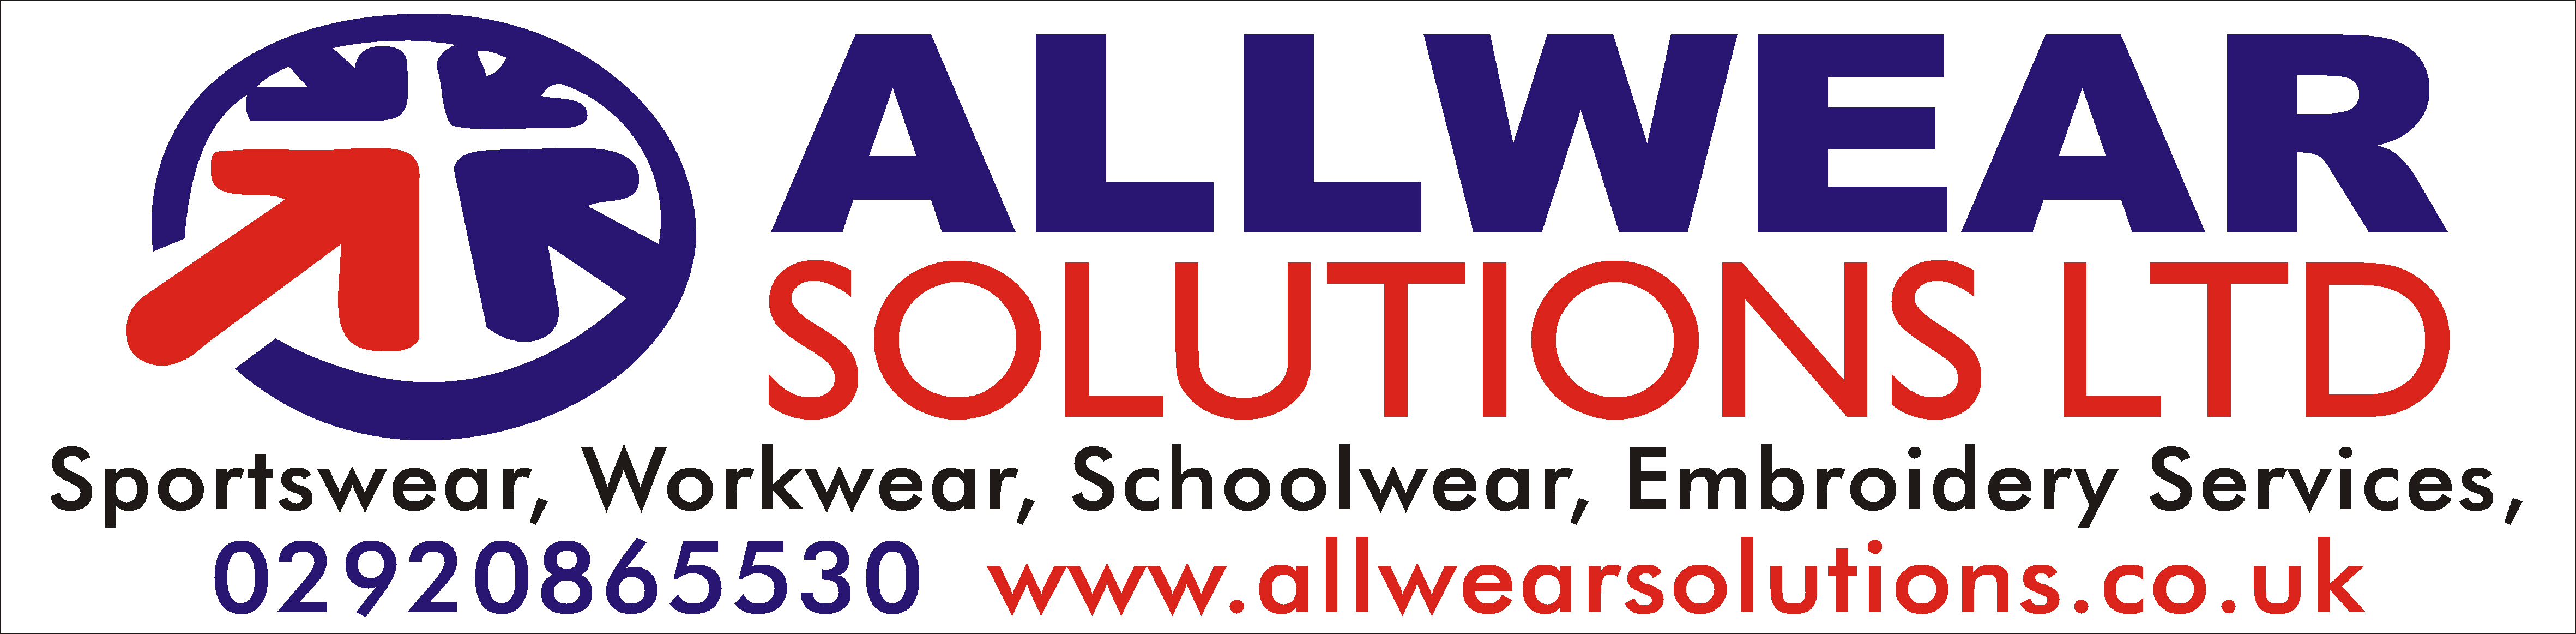 Allwear Solutions Ltd